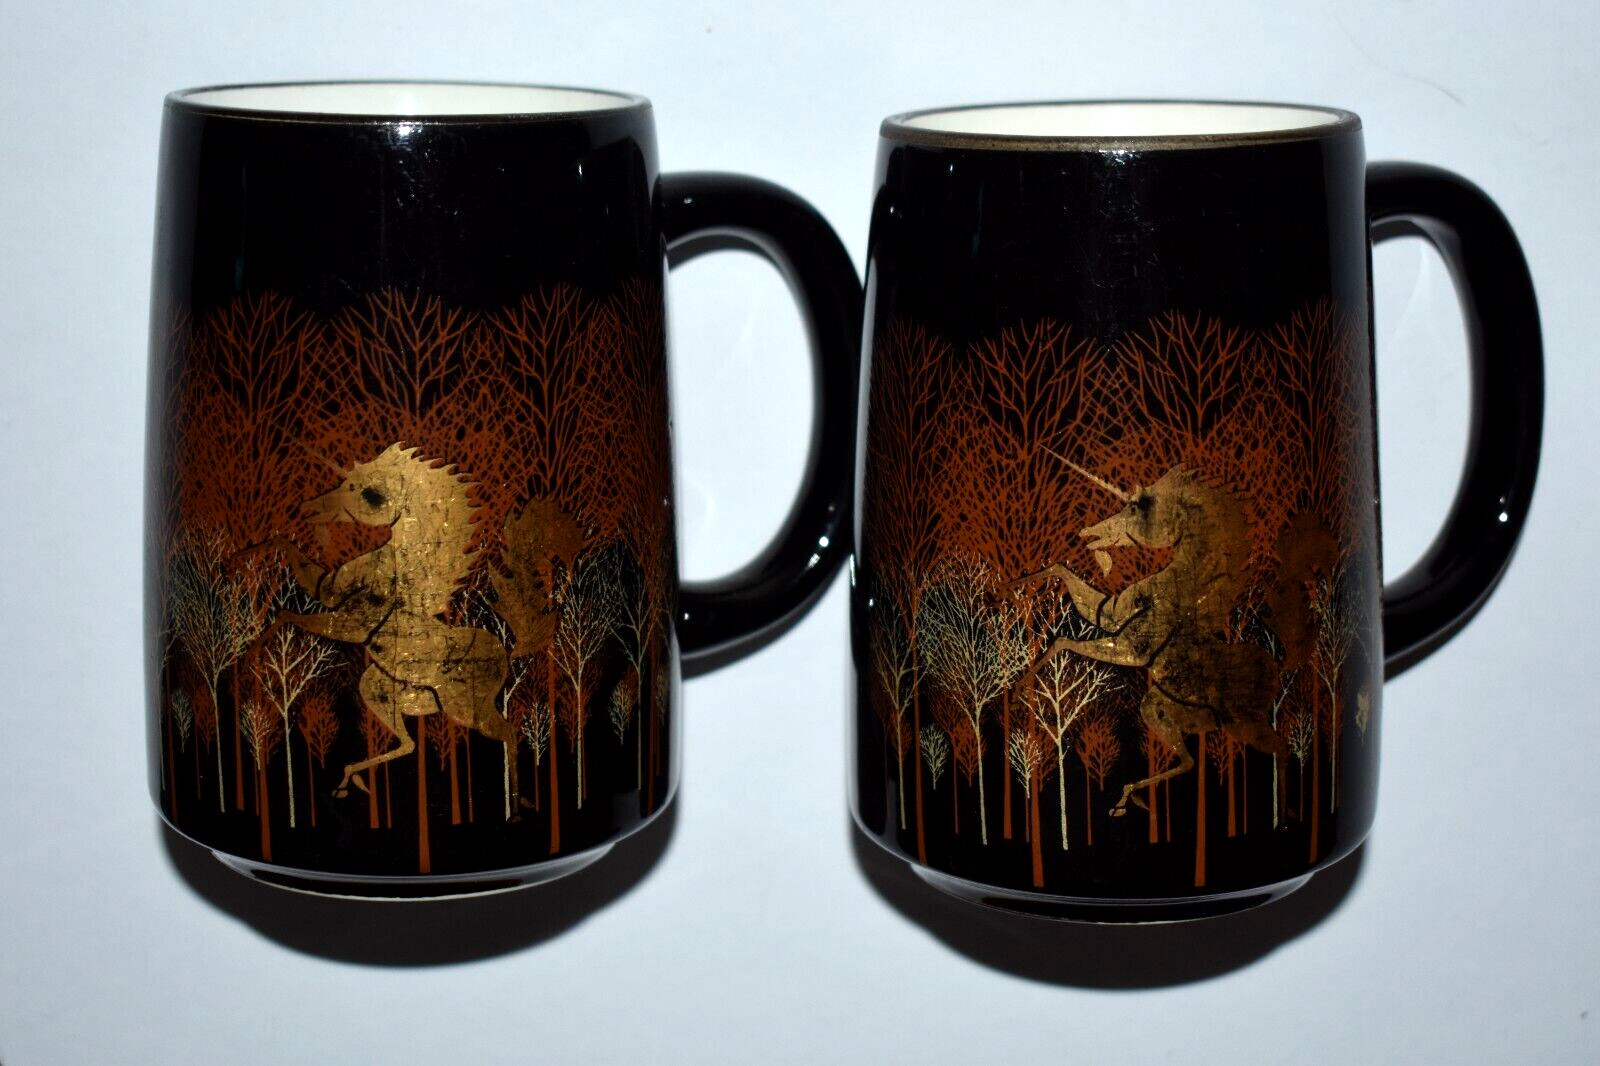 Pair of 15oz Vintage Otagiri Japan Handled Mugs Black w/ Gold Unicorns in Forest